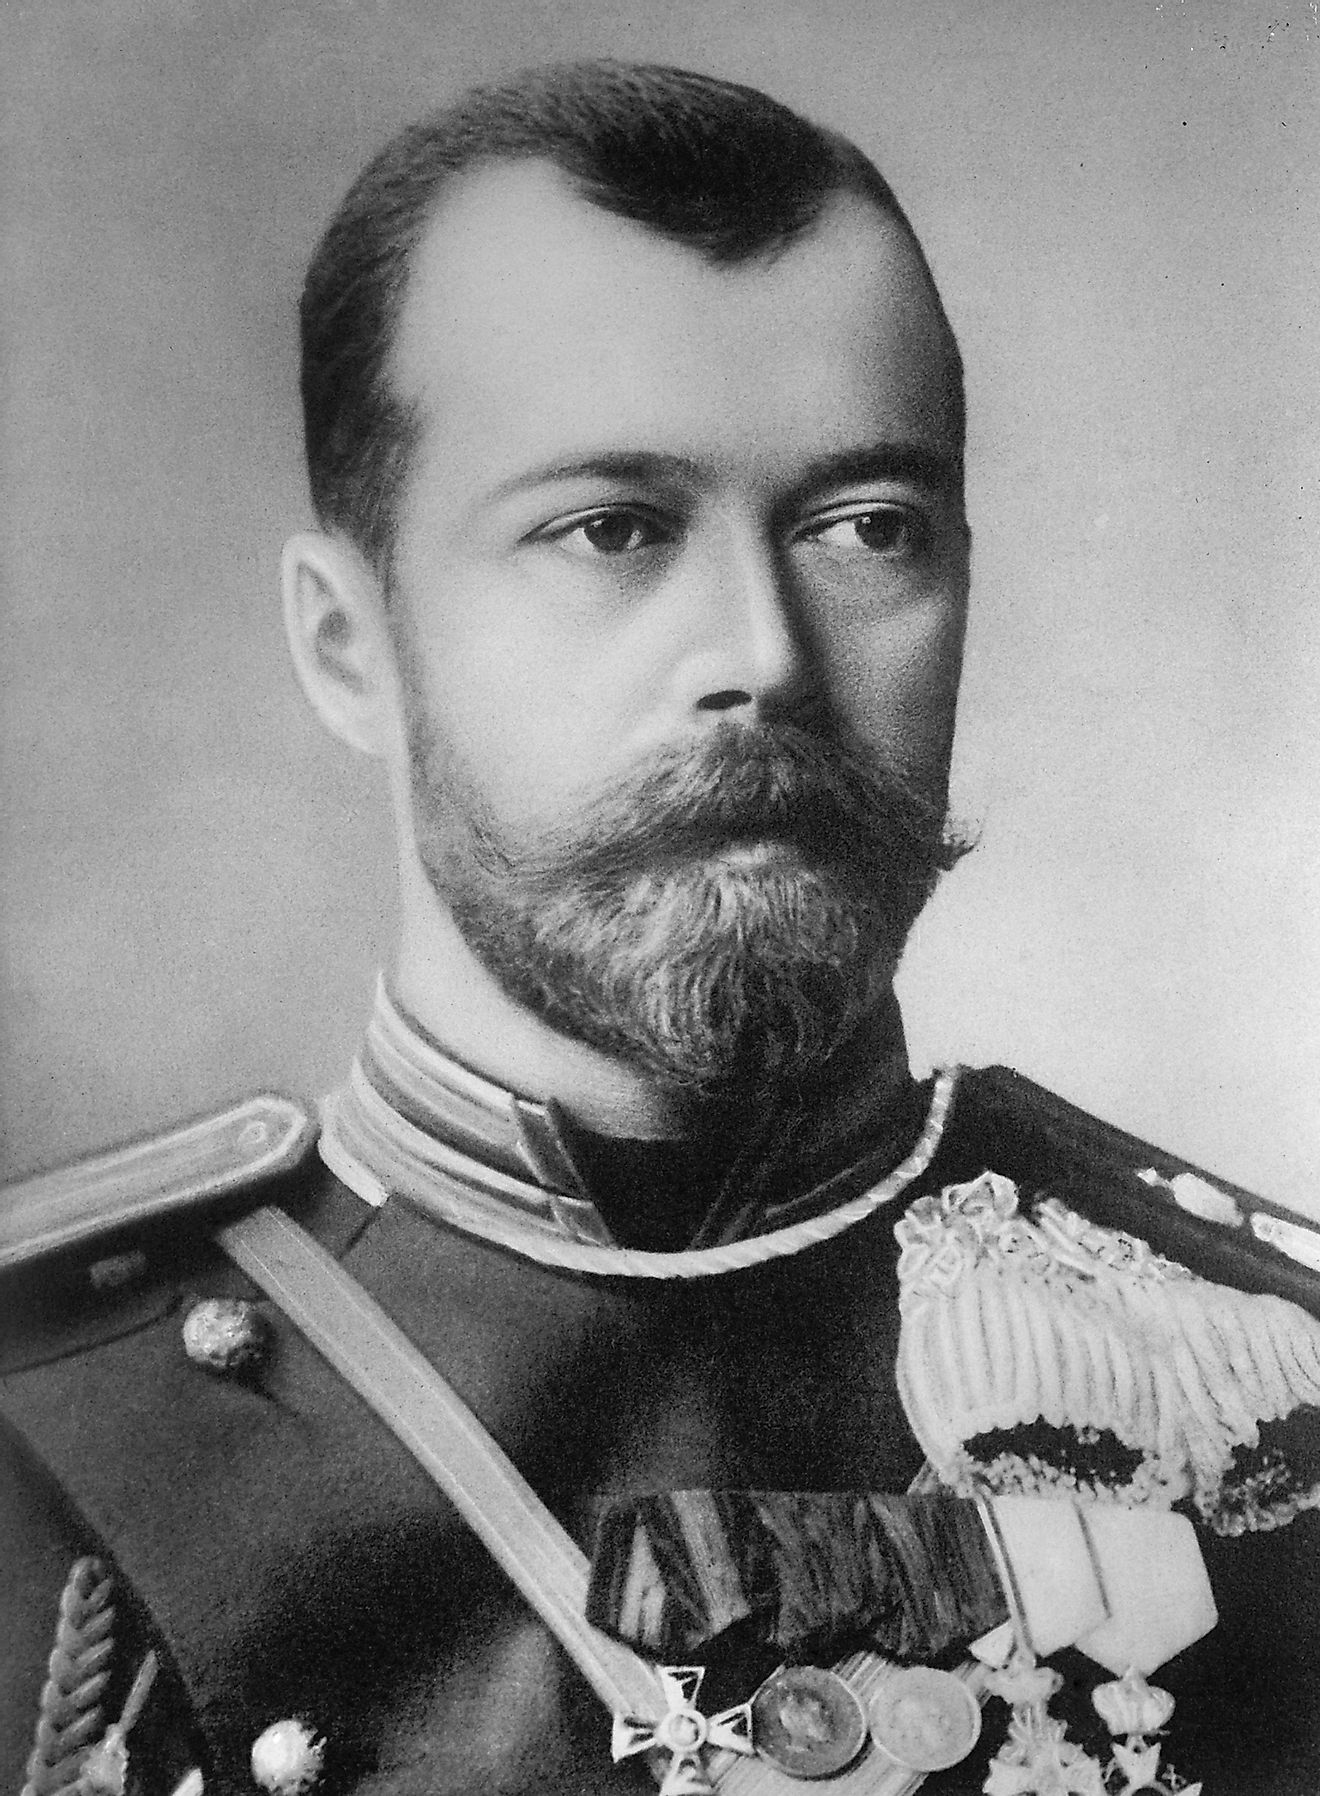 Czar Nicholas II of Russia in 1914, the year World War 1 began. Image credit: Everett Collection/Shutterstock.com